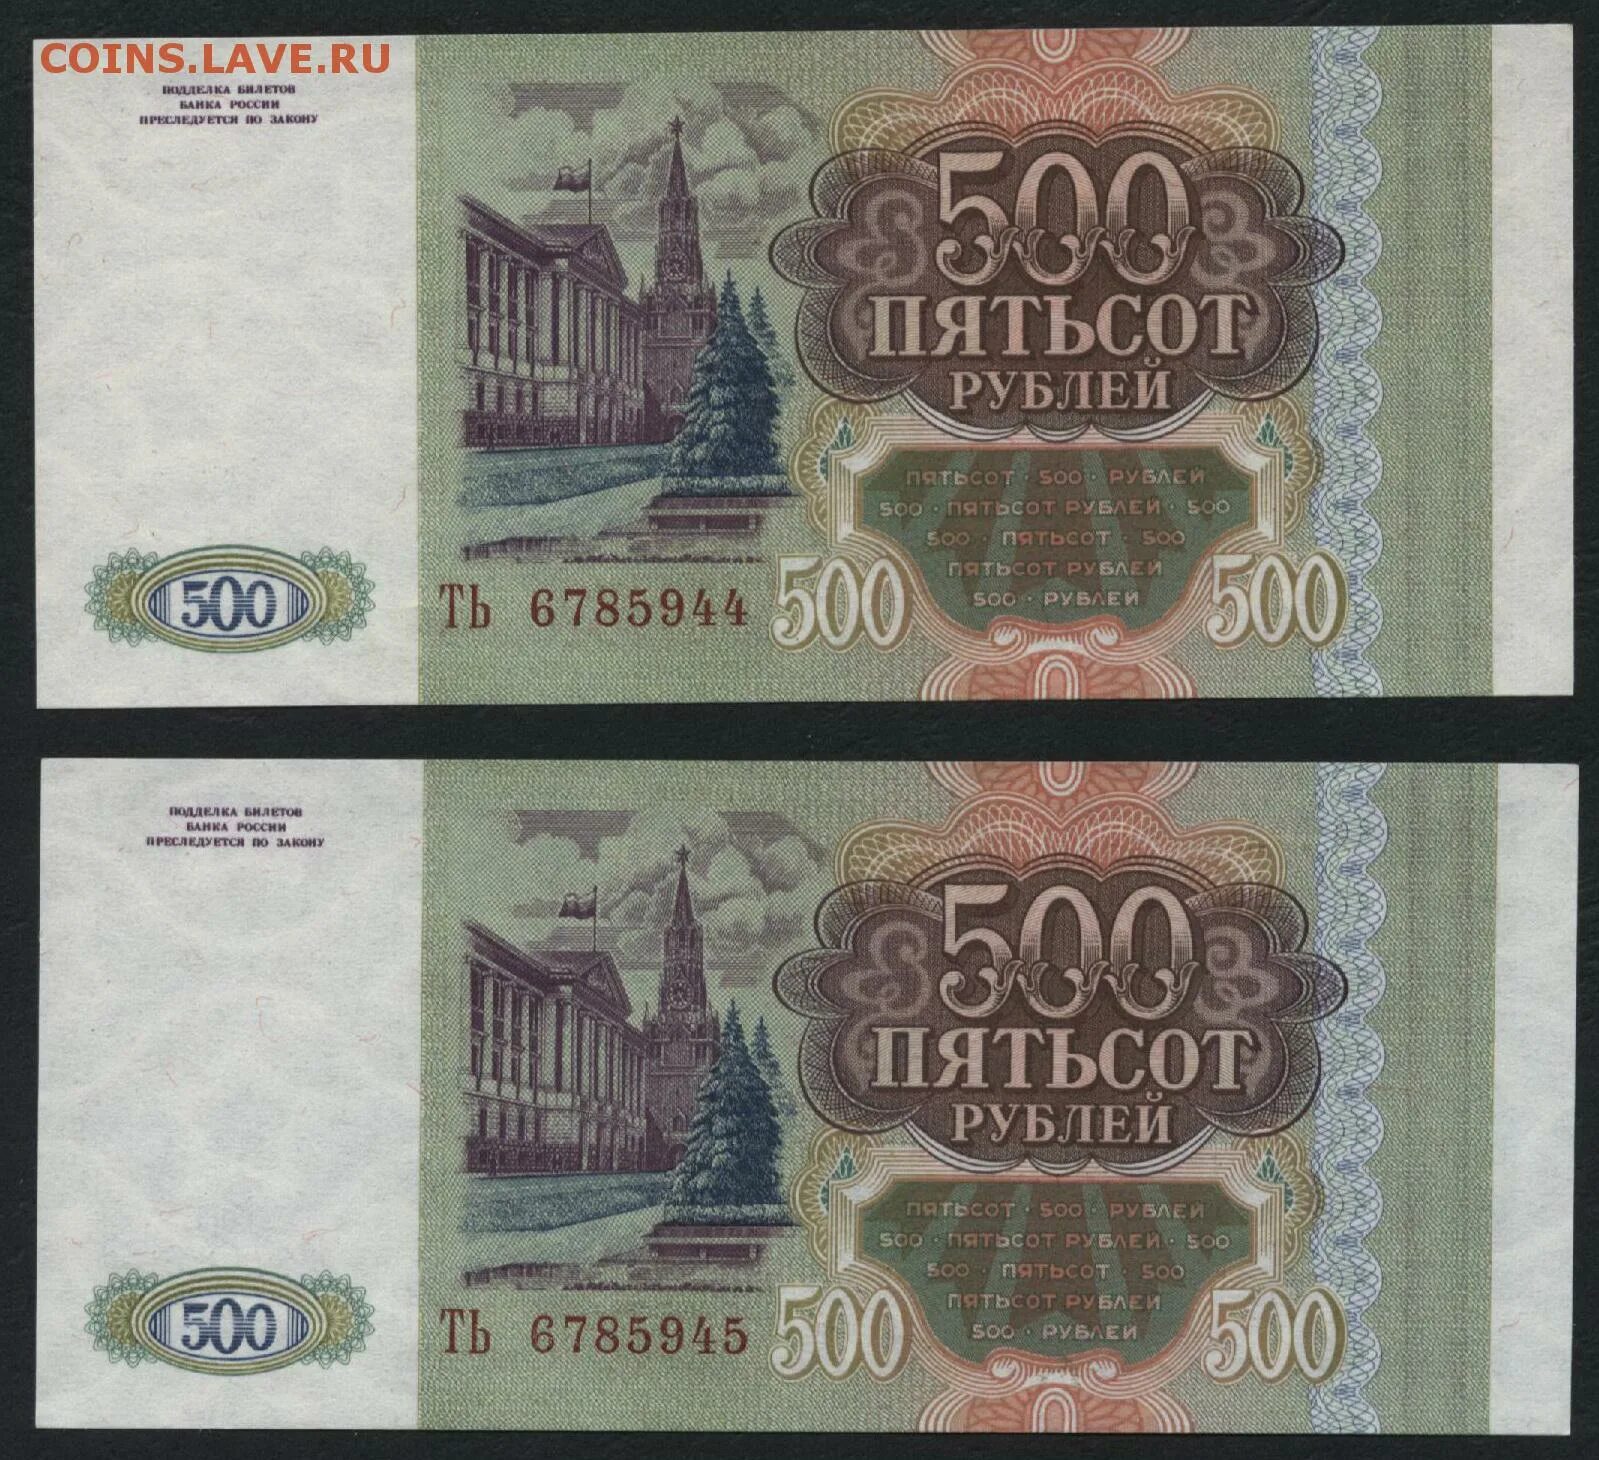 500 Рублей. 500 Рублей 1993. Пятьсот рублей 1993. 500 Рублей 1993 года. Две 500 в рублях